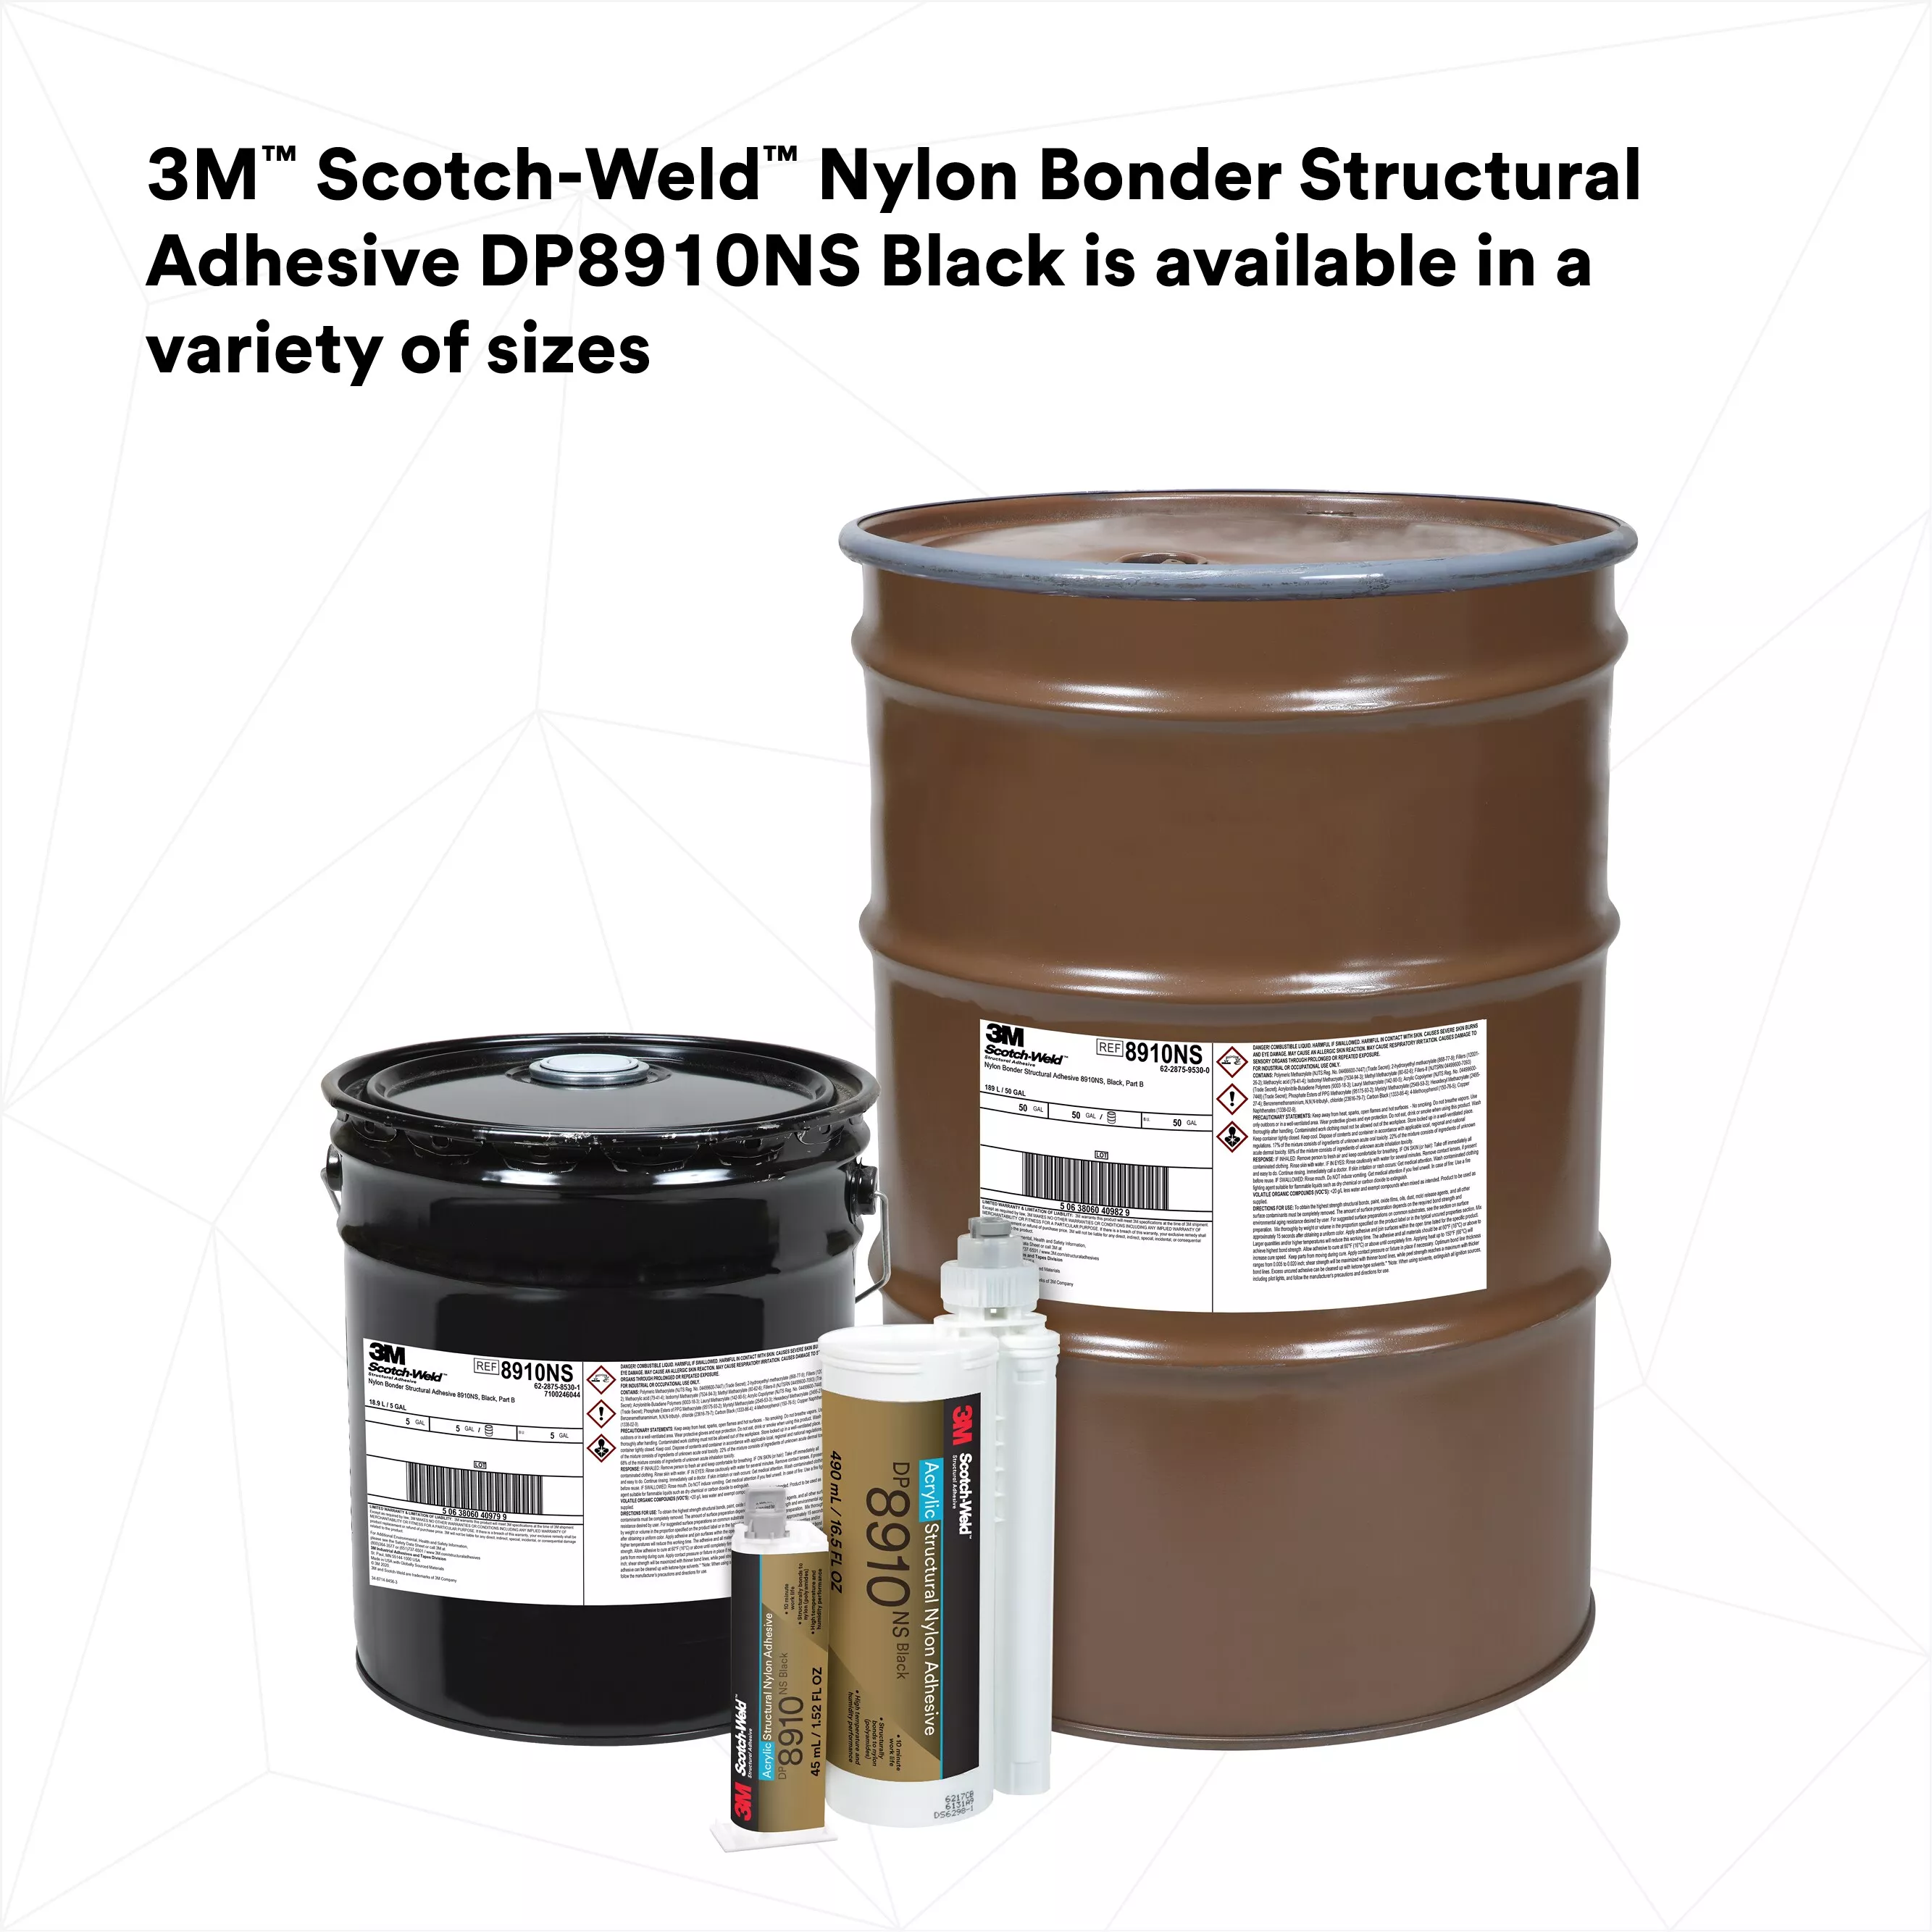 SKU 7100246044 | 3M™ Scotch-Weld™ Nylon Bonder Structural Adhesive 8910NS